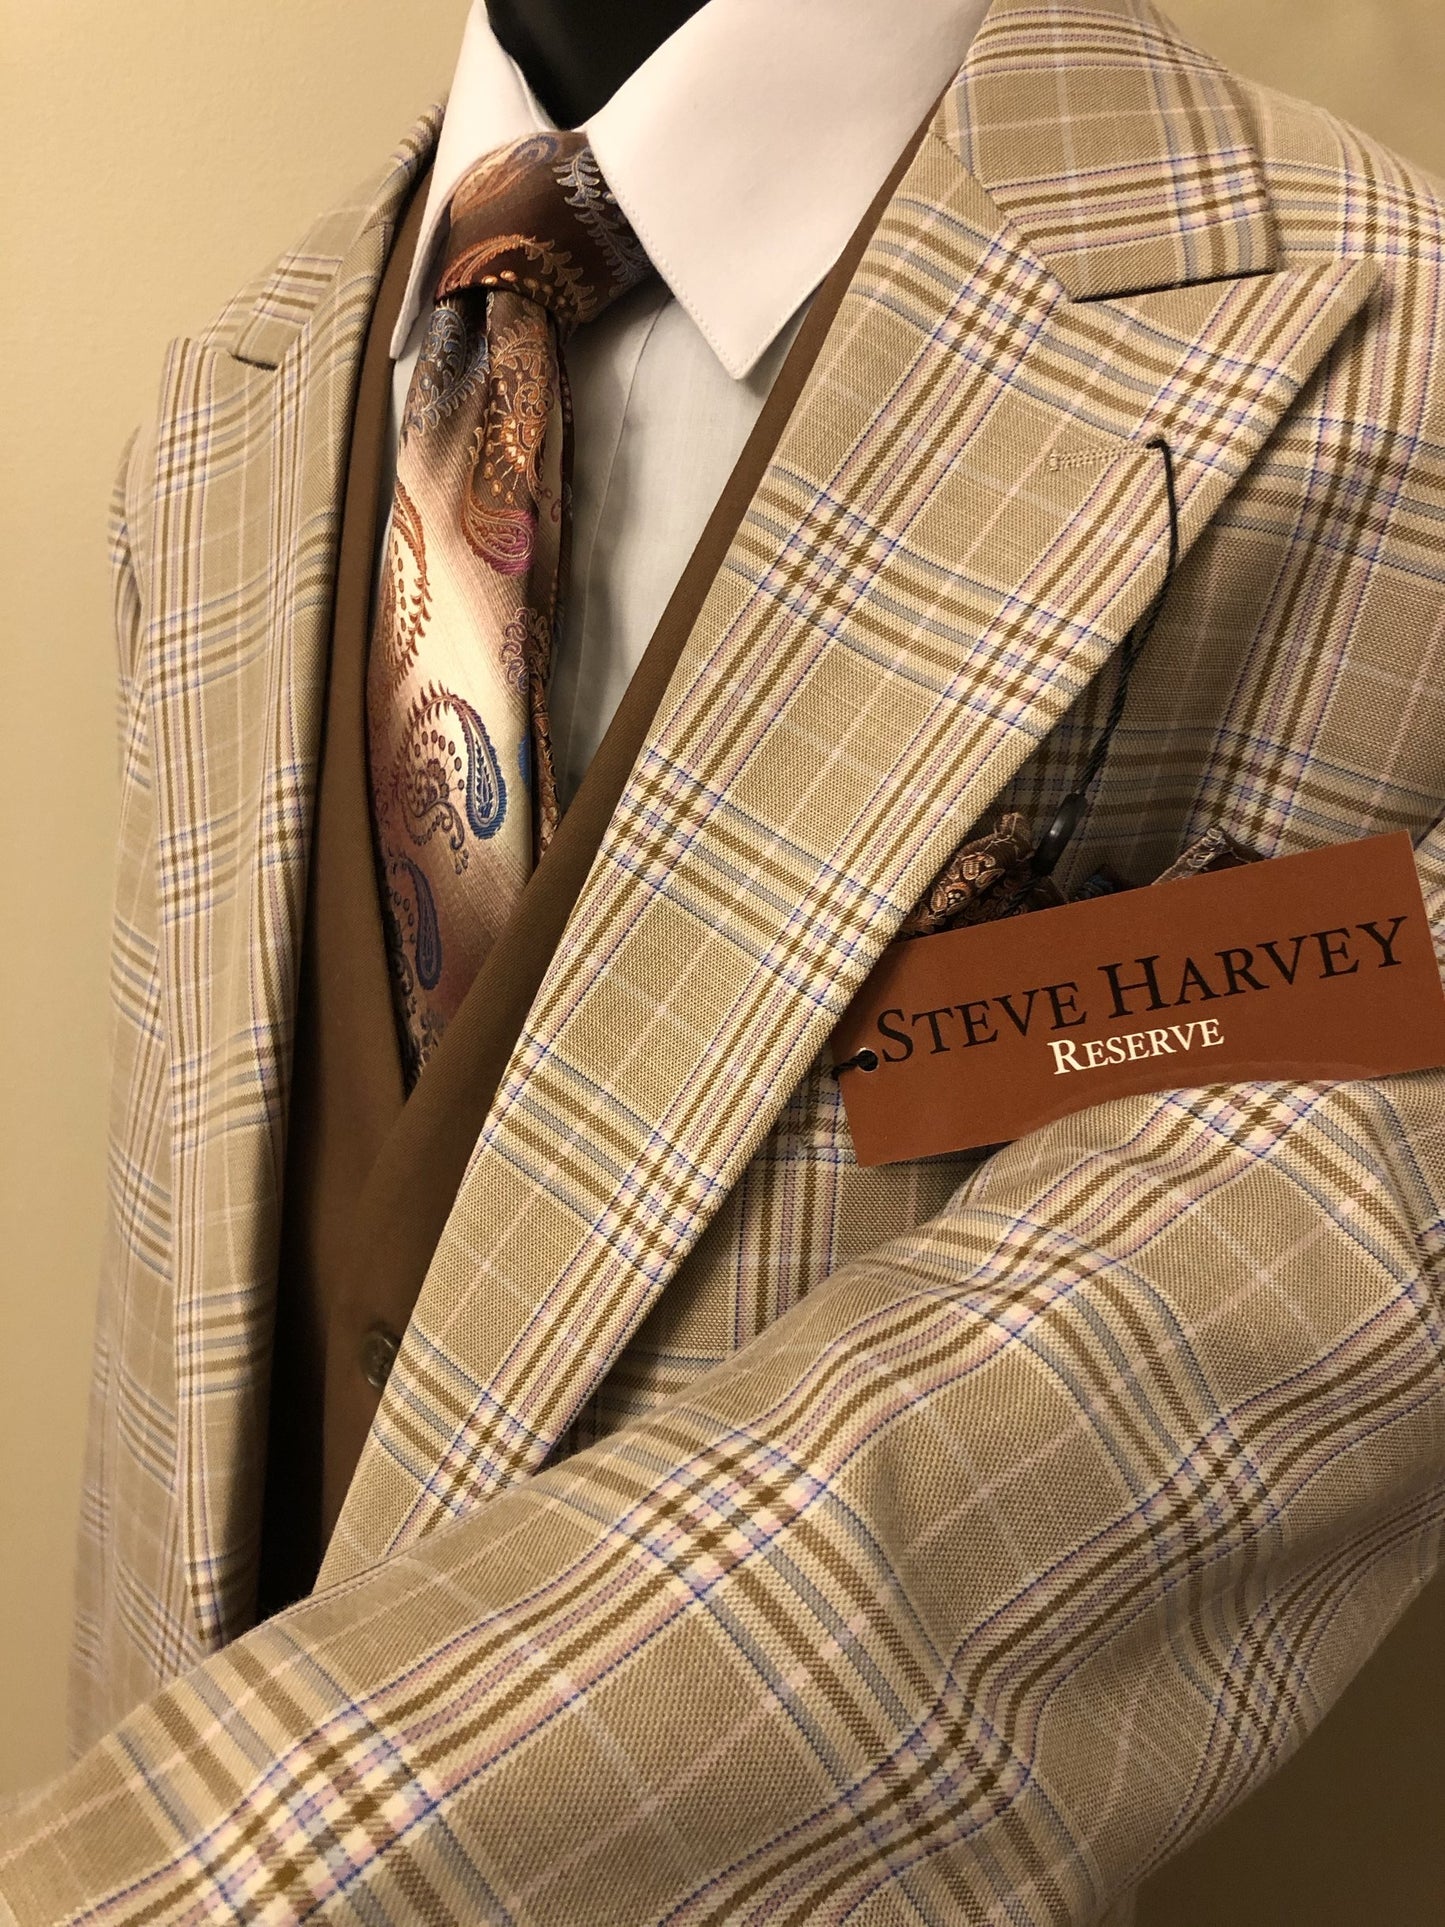 Steve Harvey 3pc. 120808SHS - On Time Fashions Tuscaloosa